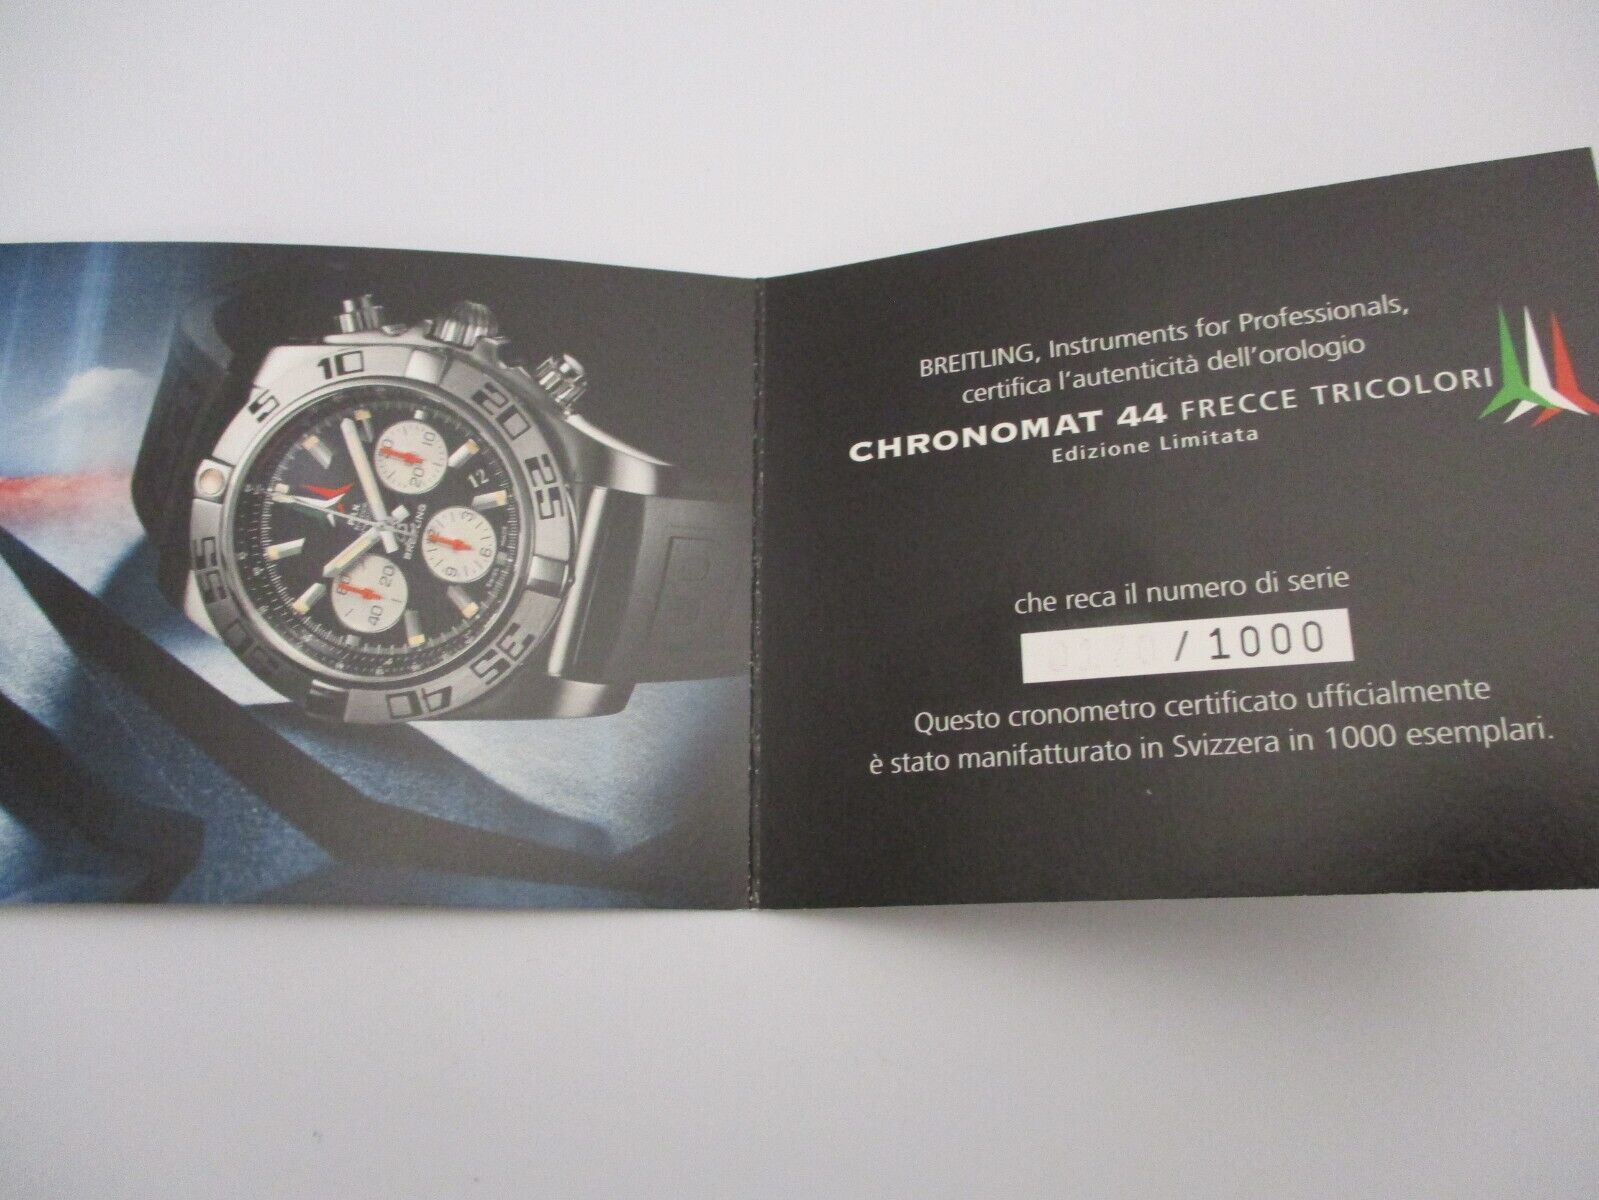 BREITLING CHRONOMAT 44 Frecce Tricolori Ltd Ed Watch Certificate of Authenticity